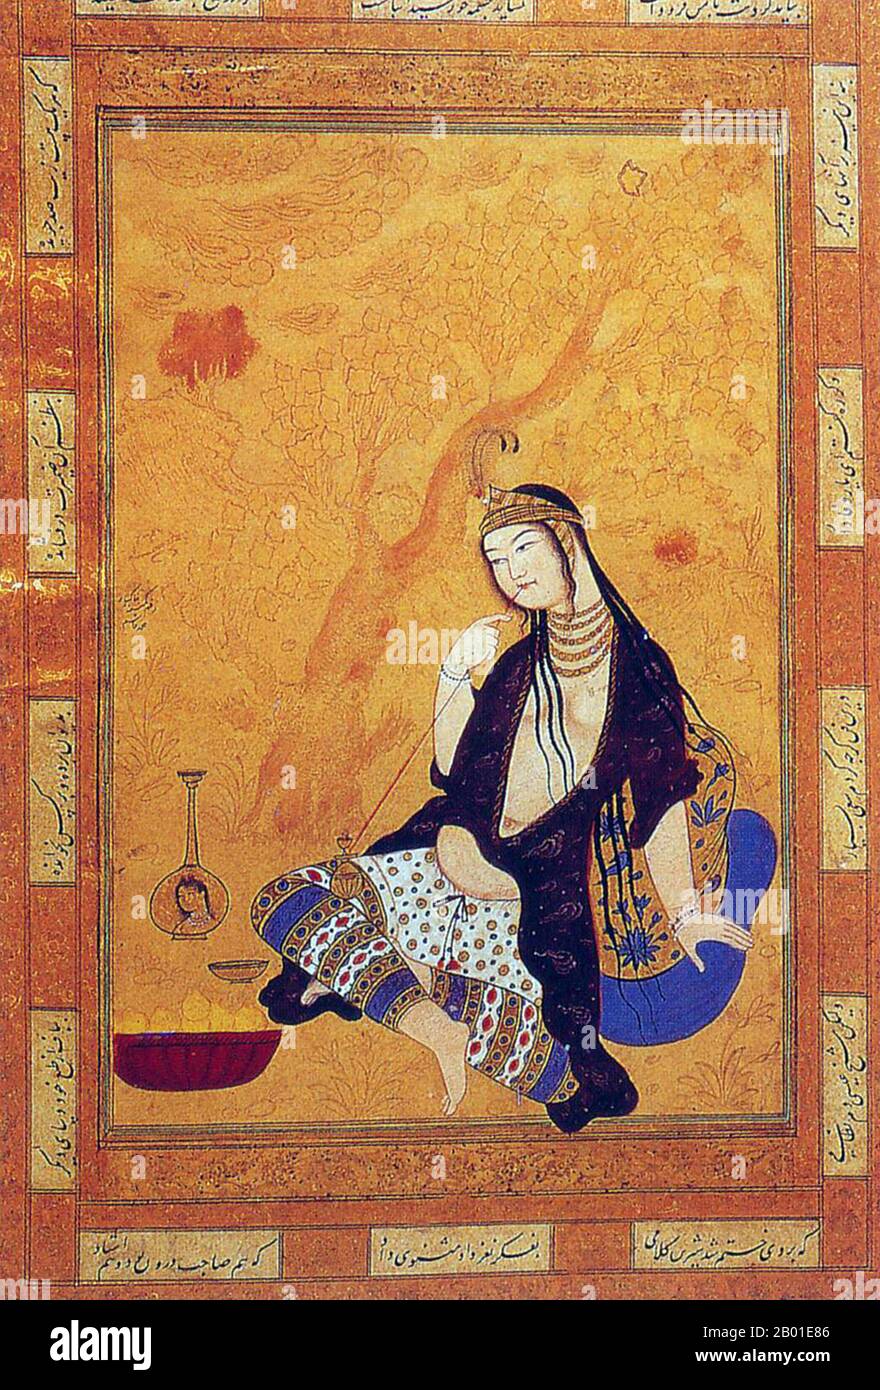 Iran/Persia: Portrait of a girl smoking, Muhammad Qasim Musavvir (c. 1575-1659),  Isfahan, 17th century. Muhammad Qasim Musavvir, one of the famous artists  of the Isfahan School, was born in Tabriz. Although his